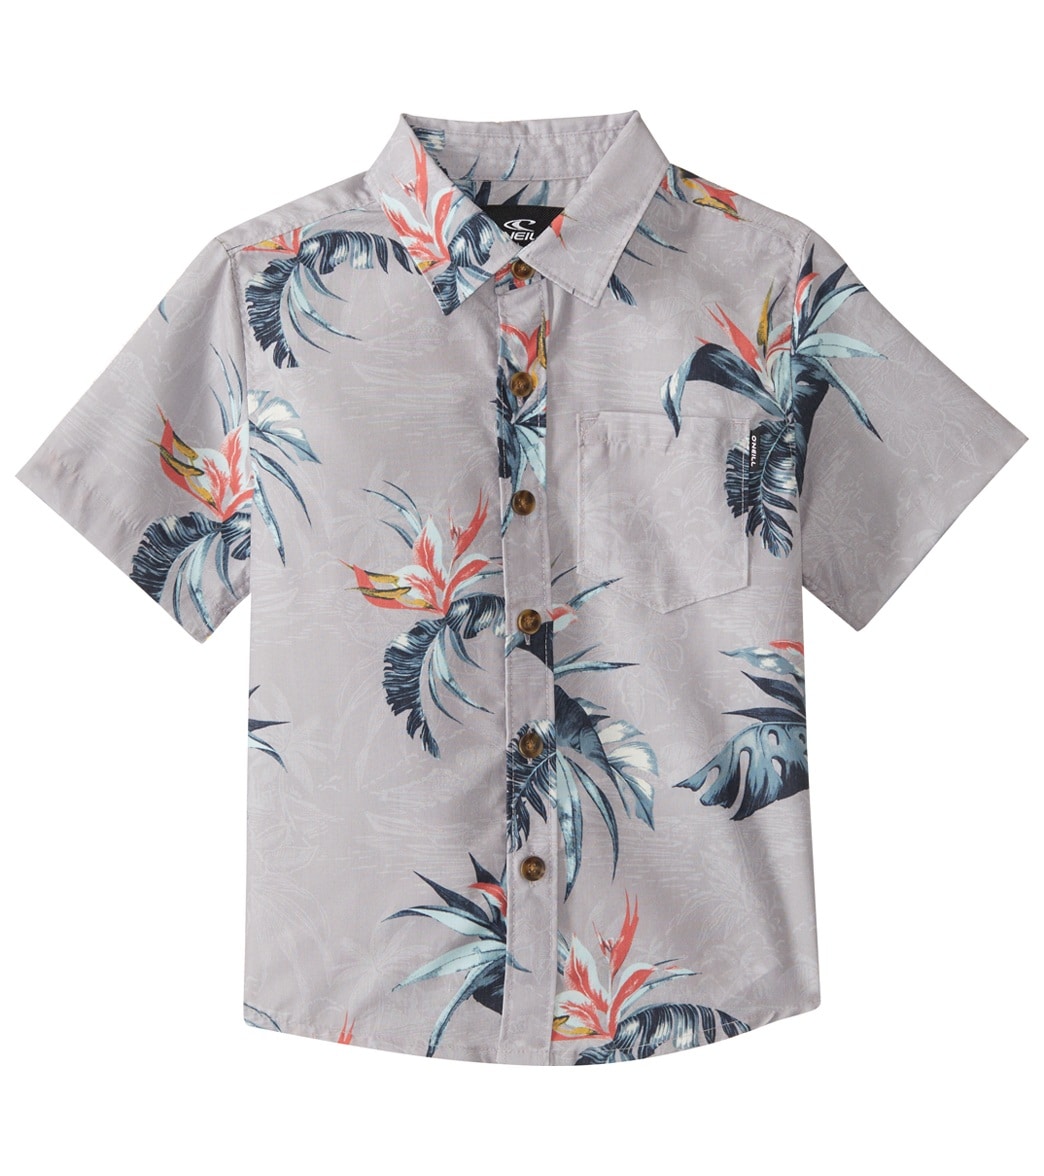 O'neill Boys' Islander Short Sleeve Shirt - Light Grey 2T Cotton/Polyester - Swimoutlet.com